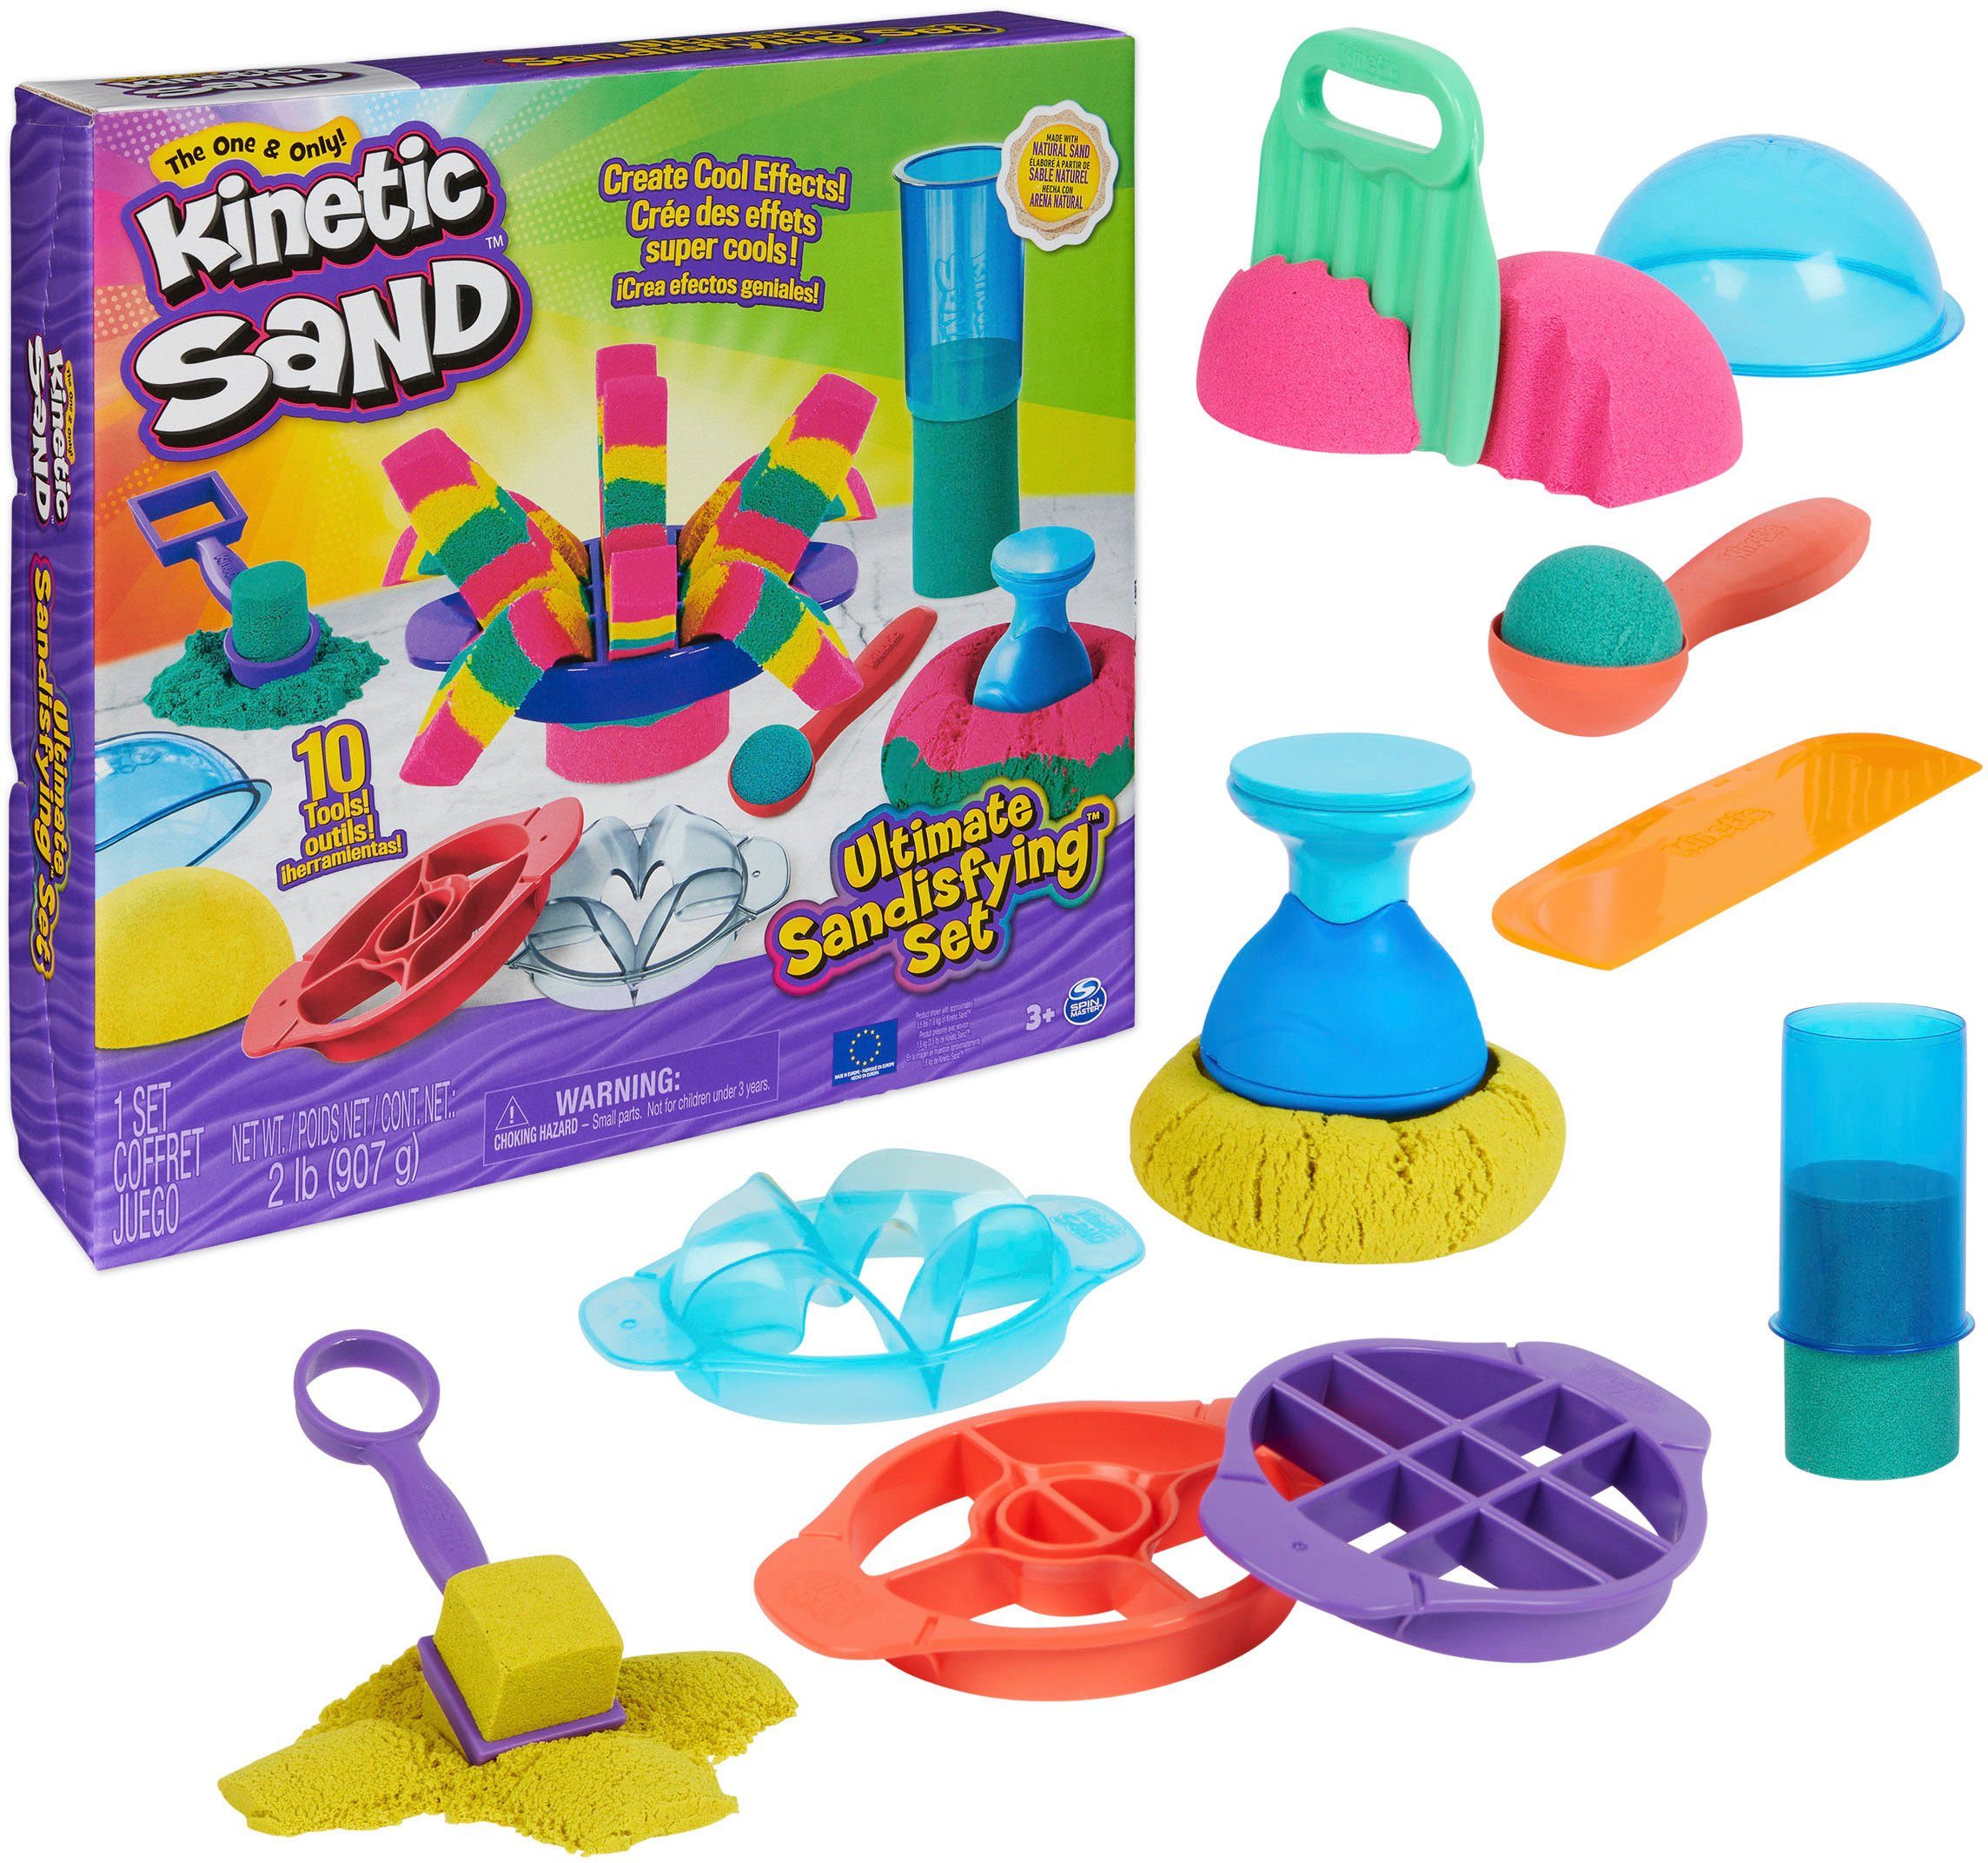 Spin Master Kreativset Kinetic Sand - Ultimate Sandisfying Set 907g